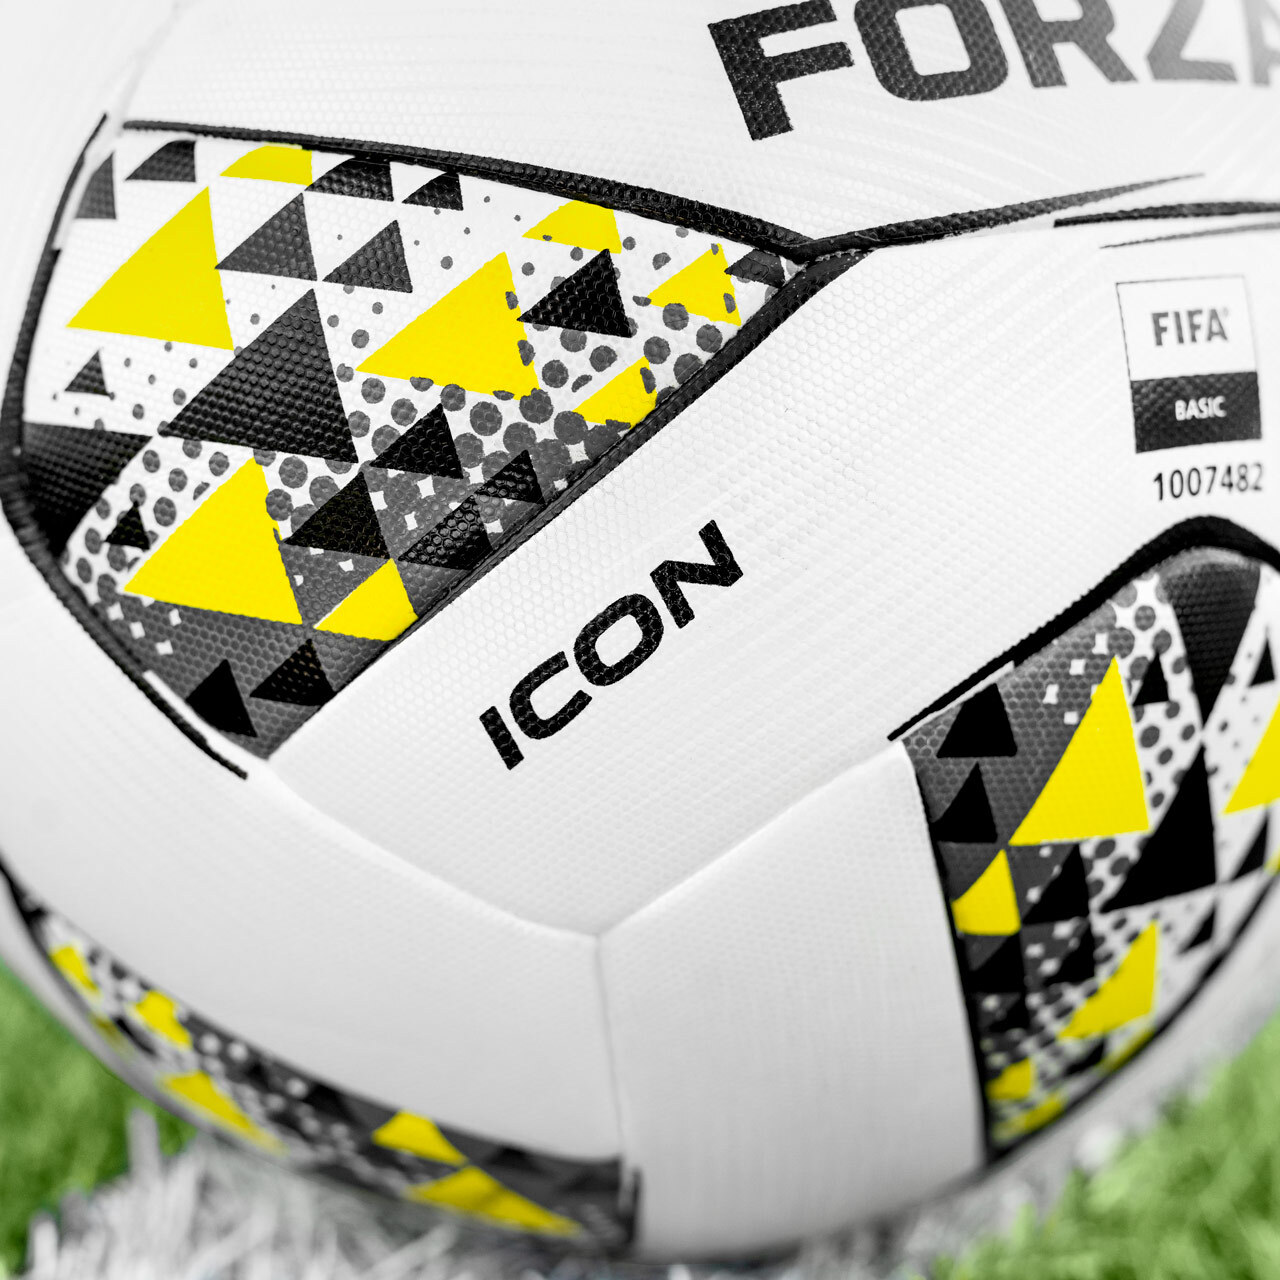 FORZA Icon Pro Match Soccer Balls [International Match Certified] [Colour: Yellow / White] [Ball Size:: Size 3 (Kids)]